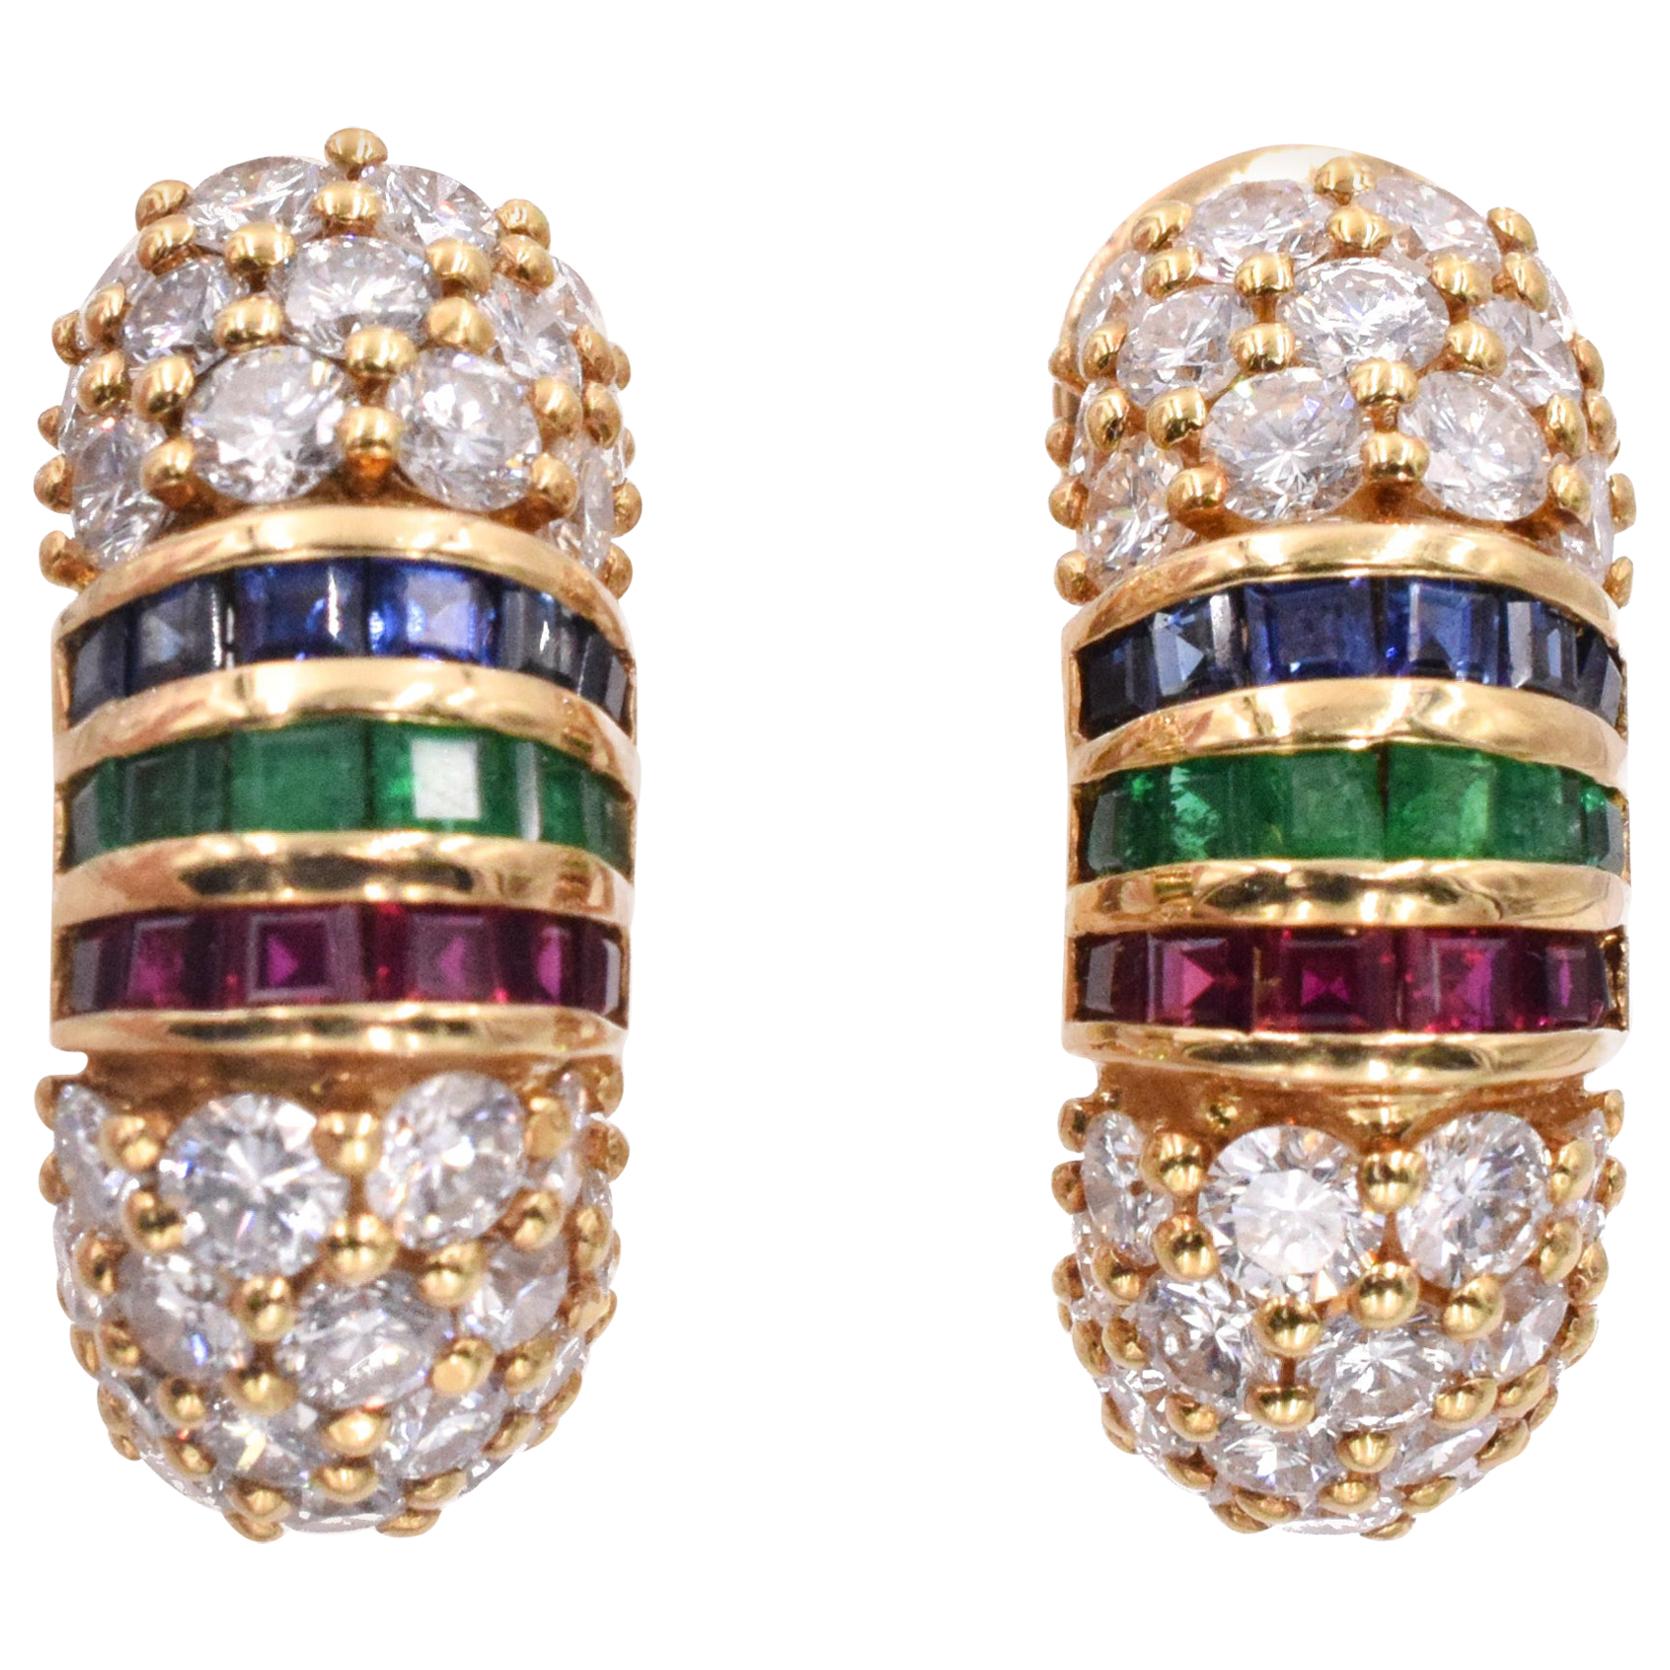 Cerchi Van Cleef & Arpels con diamanti, zaffiri, rubini e smeraldi